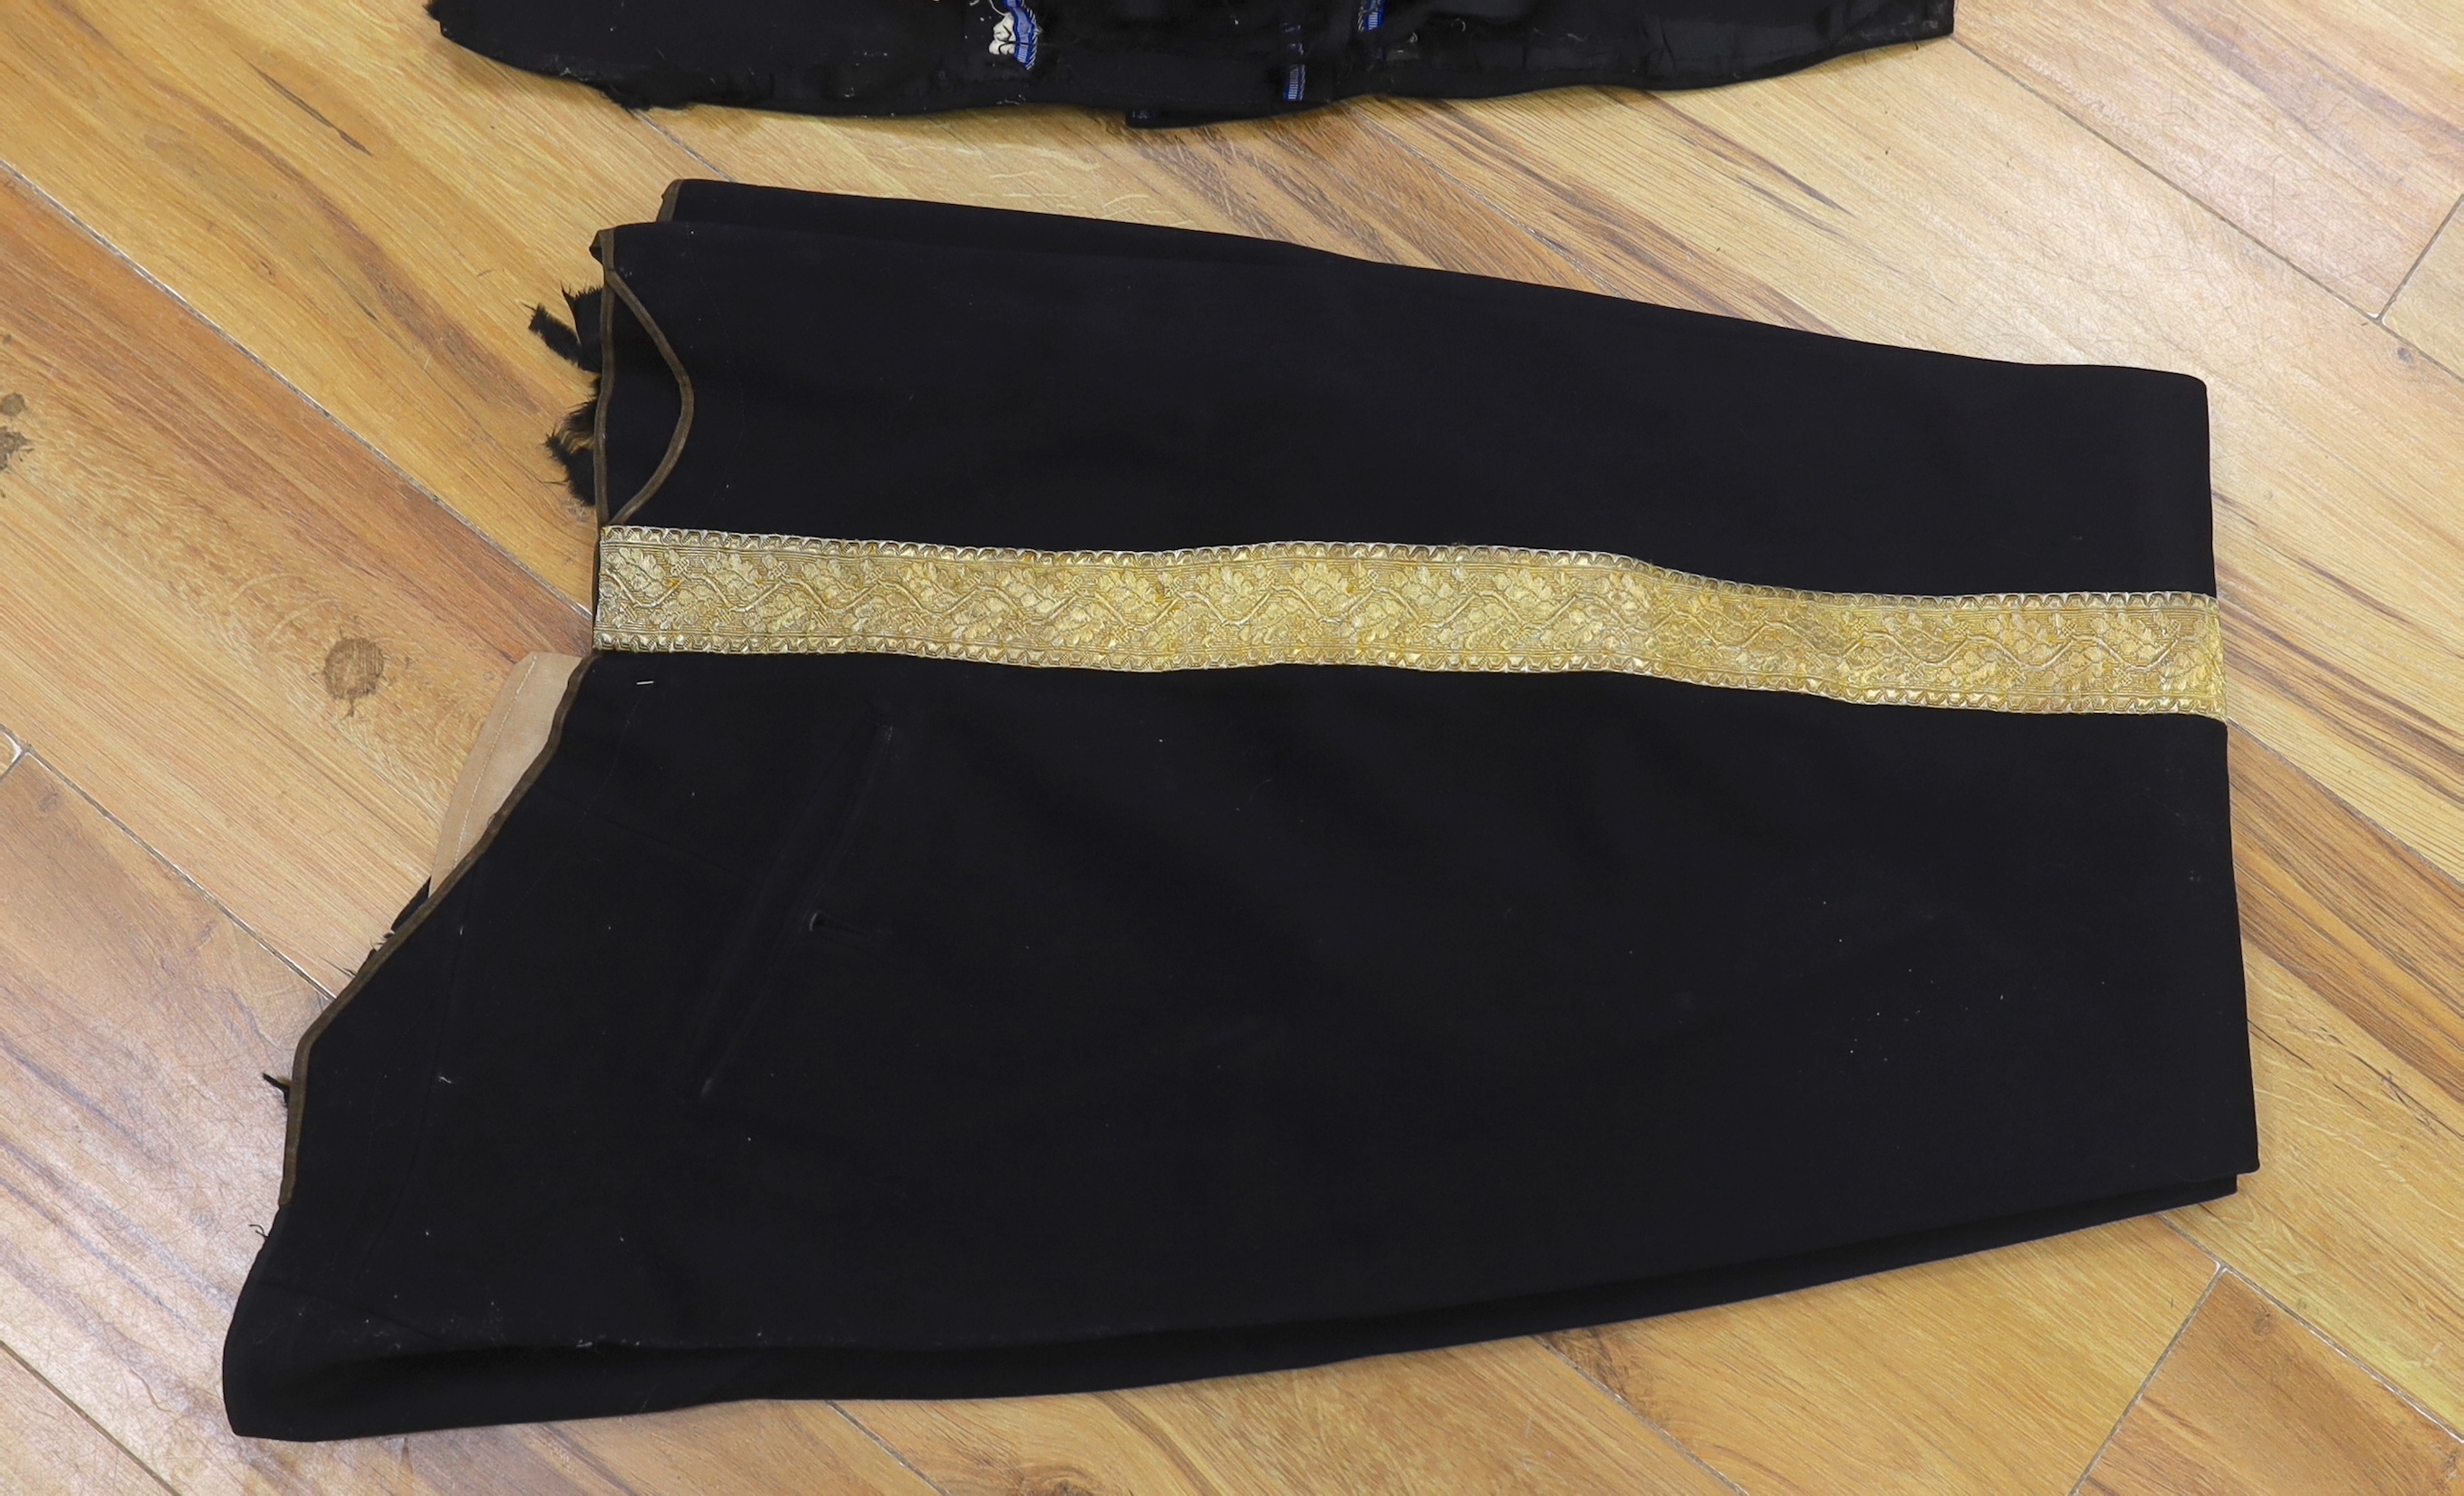 A military black wool dress uniform, with gold decorative braiding